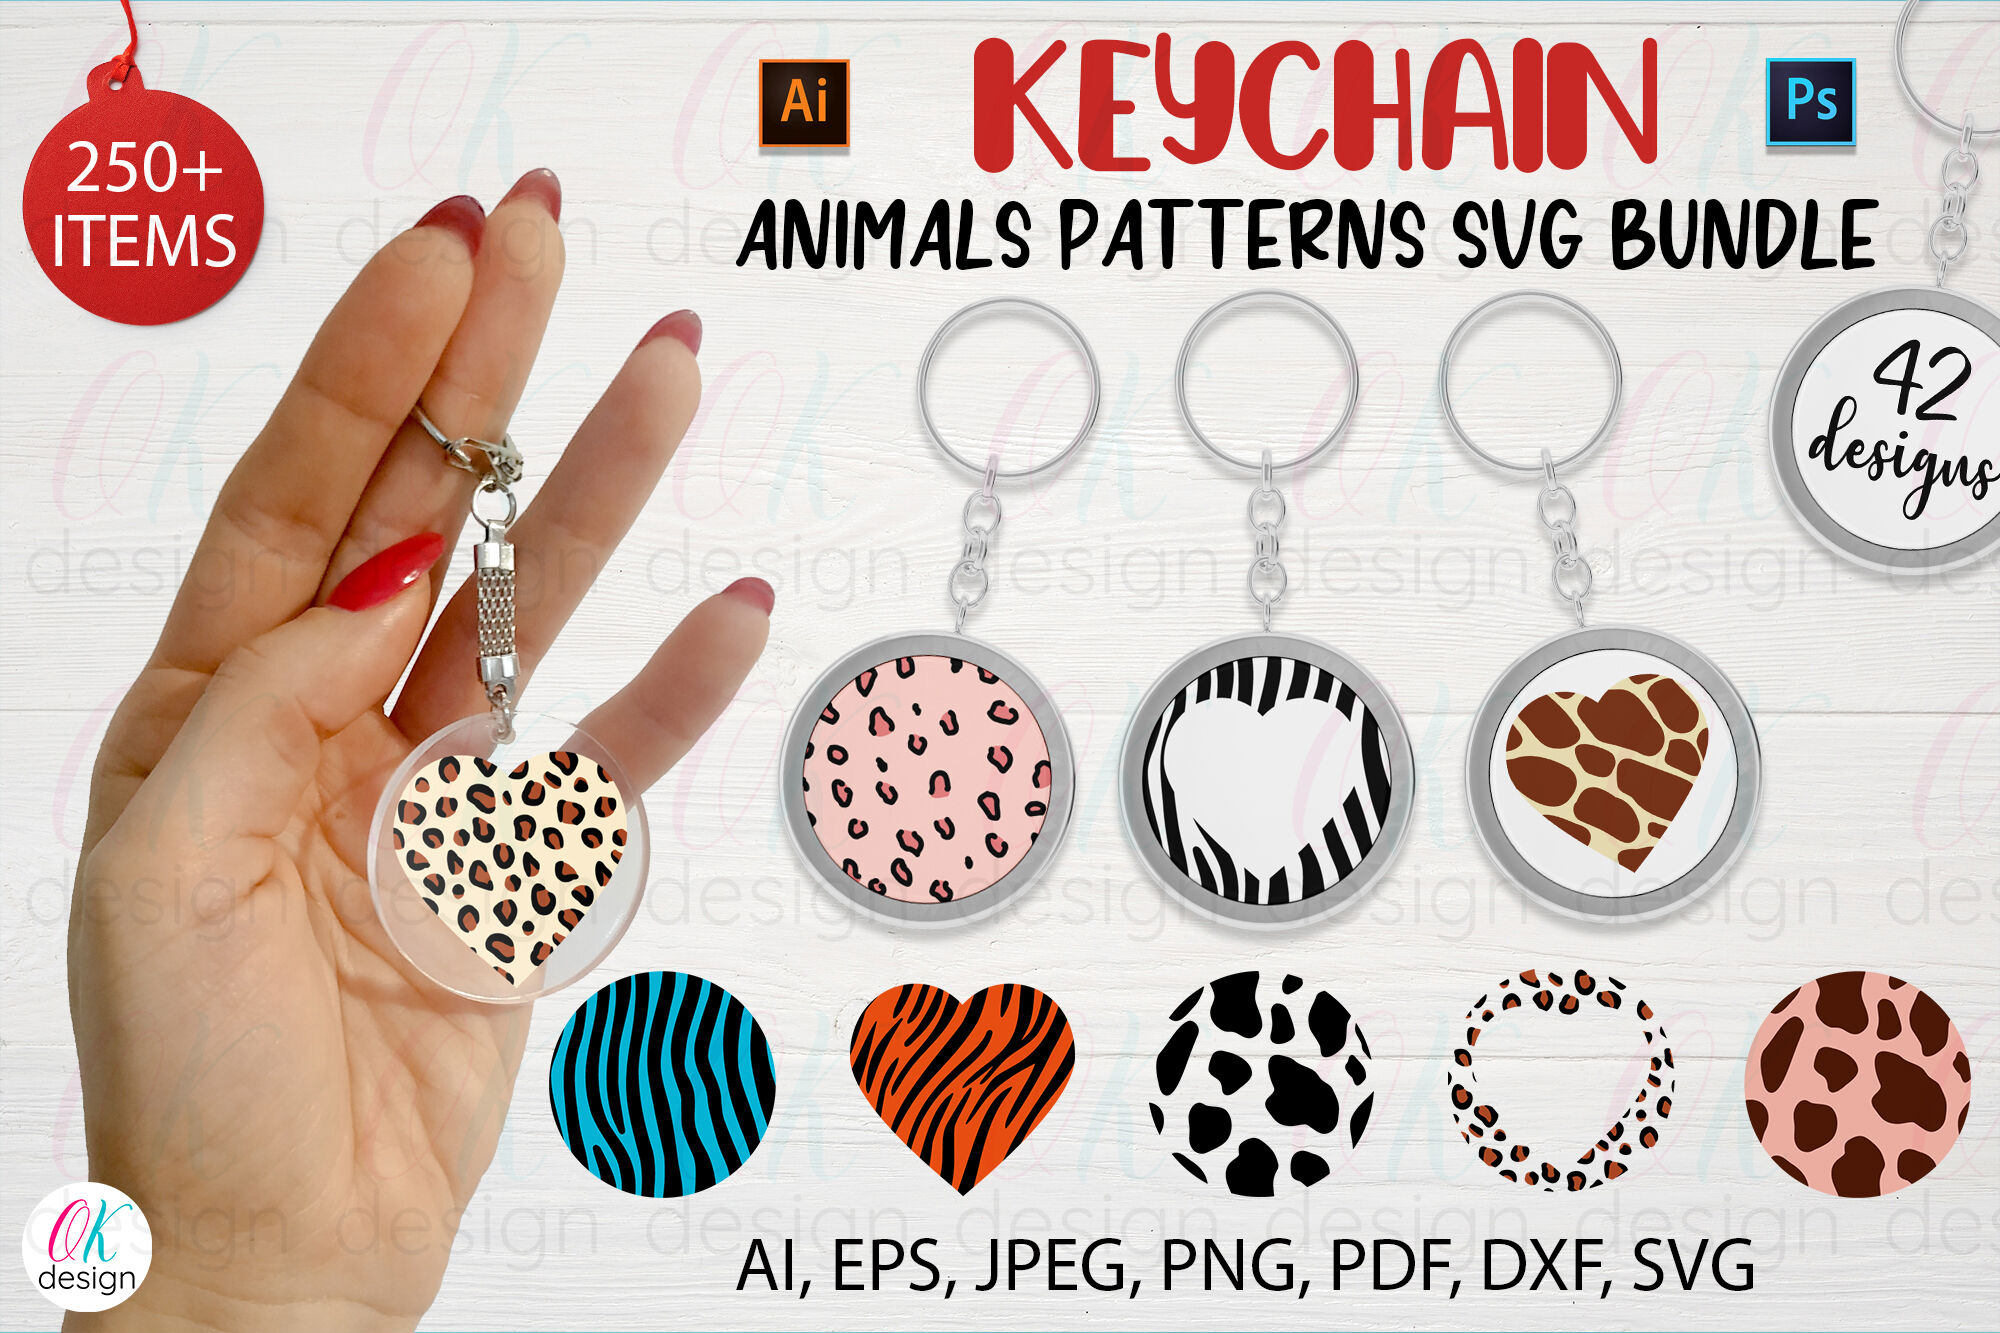 Keychain Svg Bundle Keychain Animals Patterns Bundle By Ok Design Thehungryjpeg Com